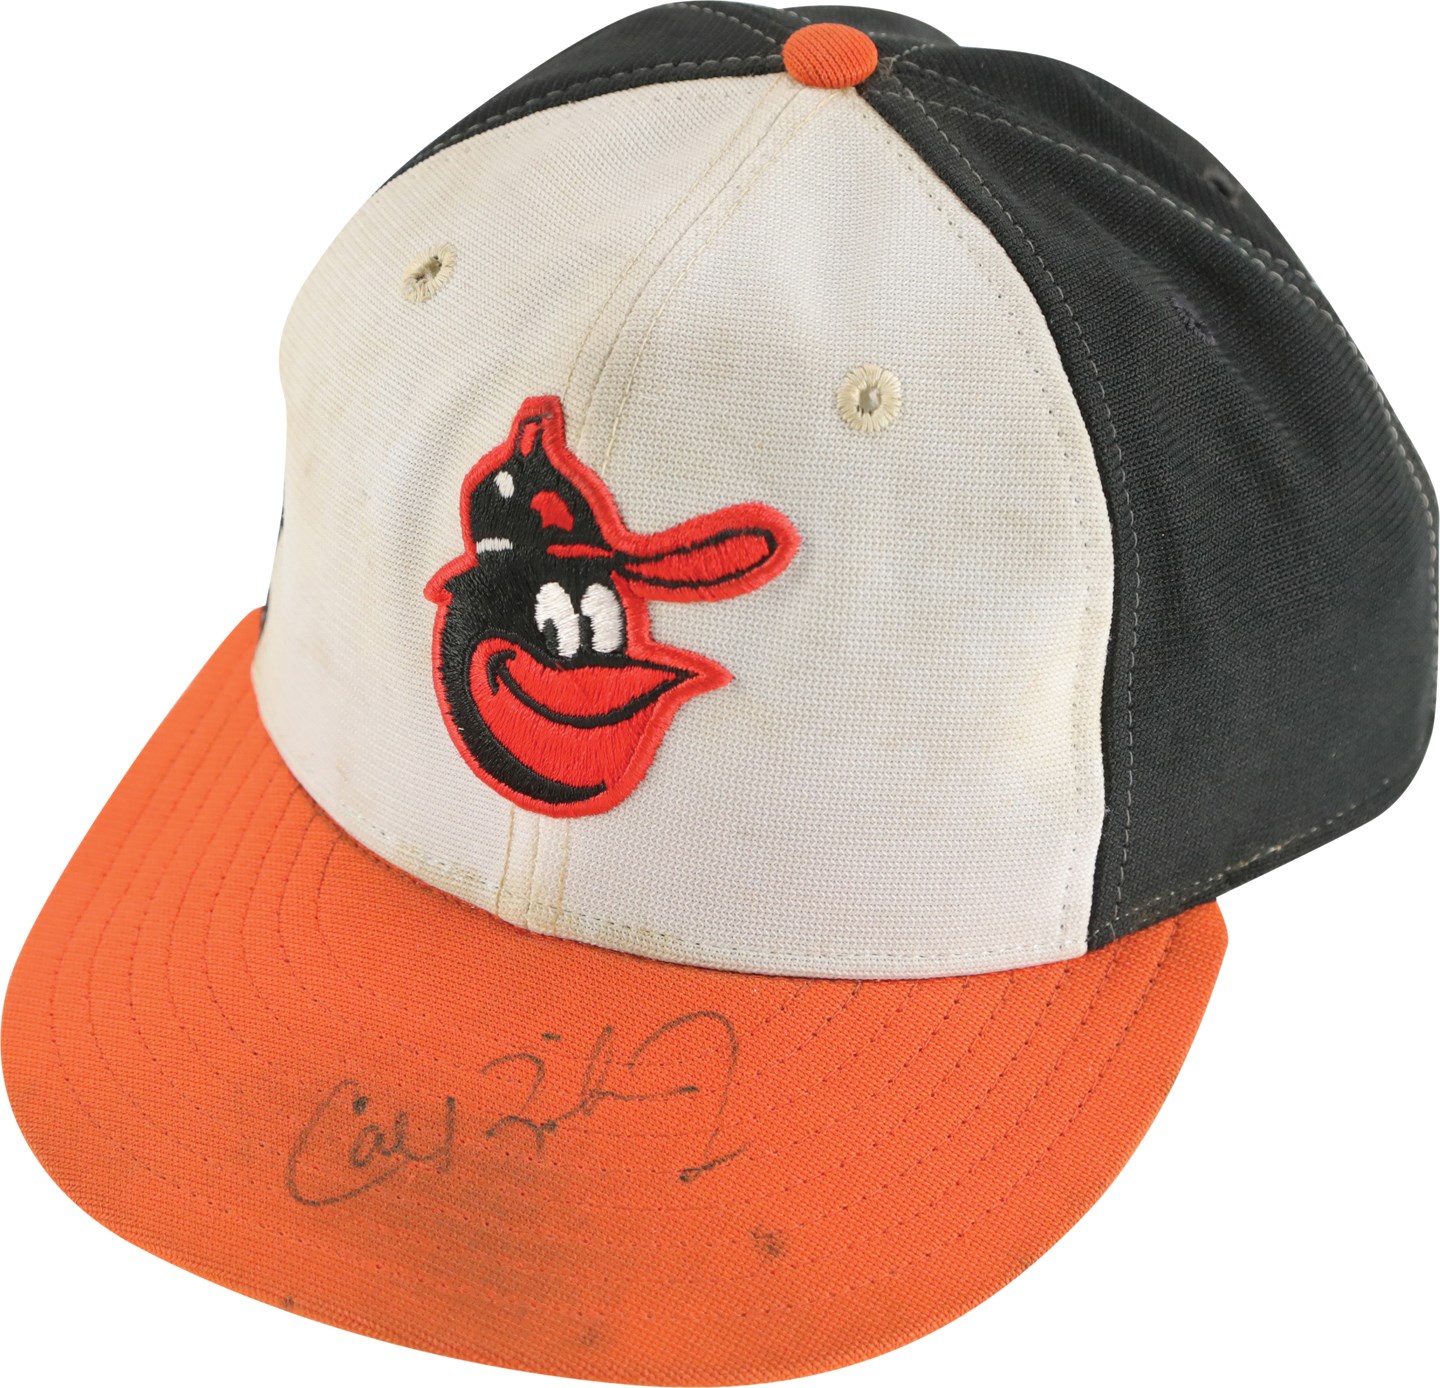 - Rookie Era Cal Ripken Jr. Baltimore Orioles Signed Game Used Hat (PSA)